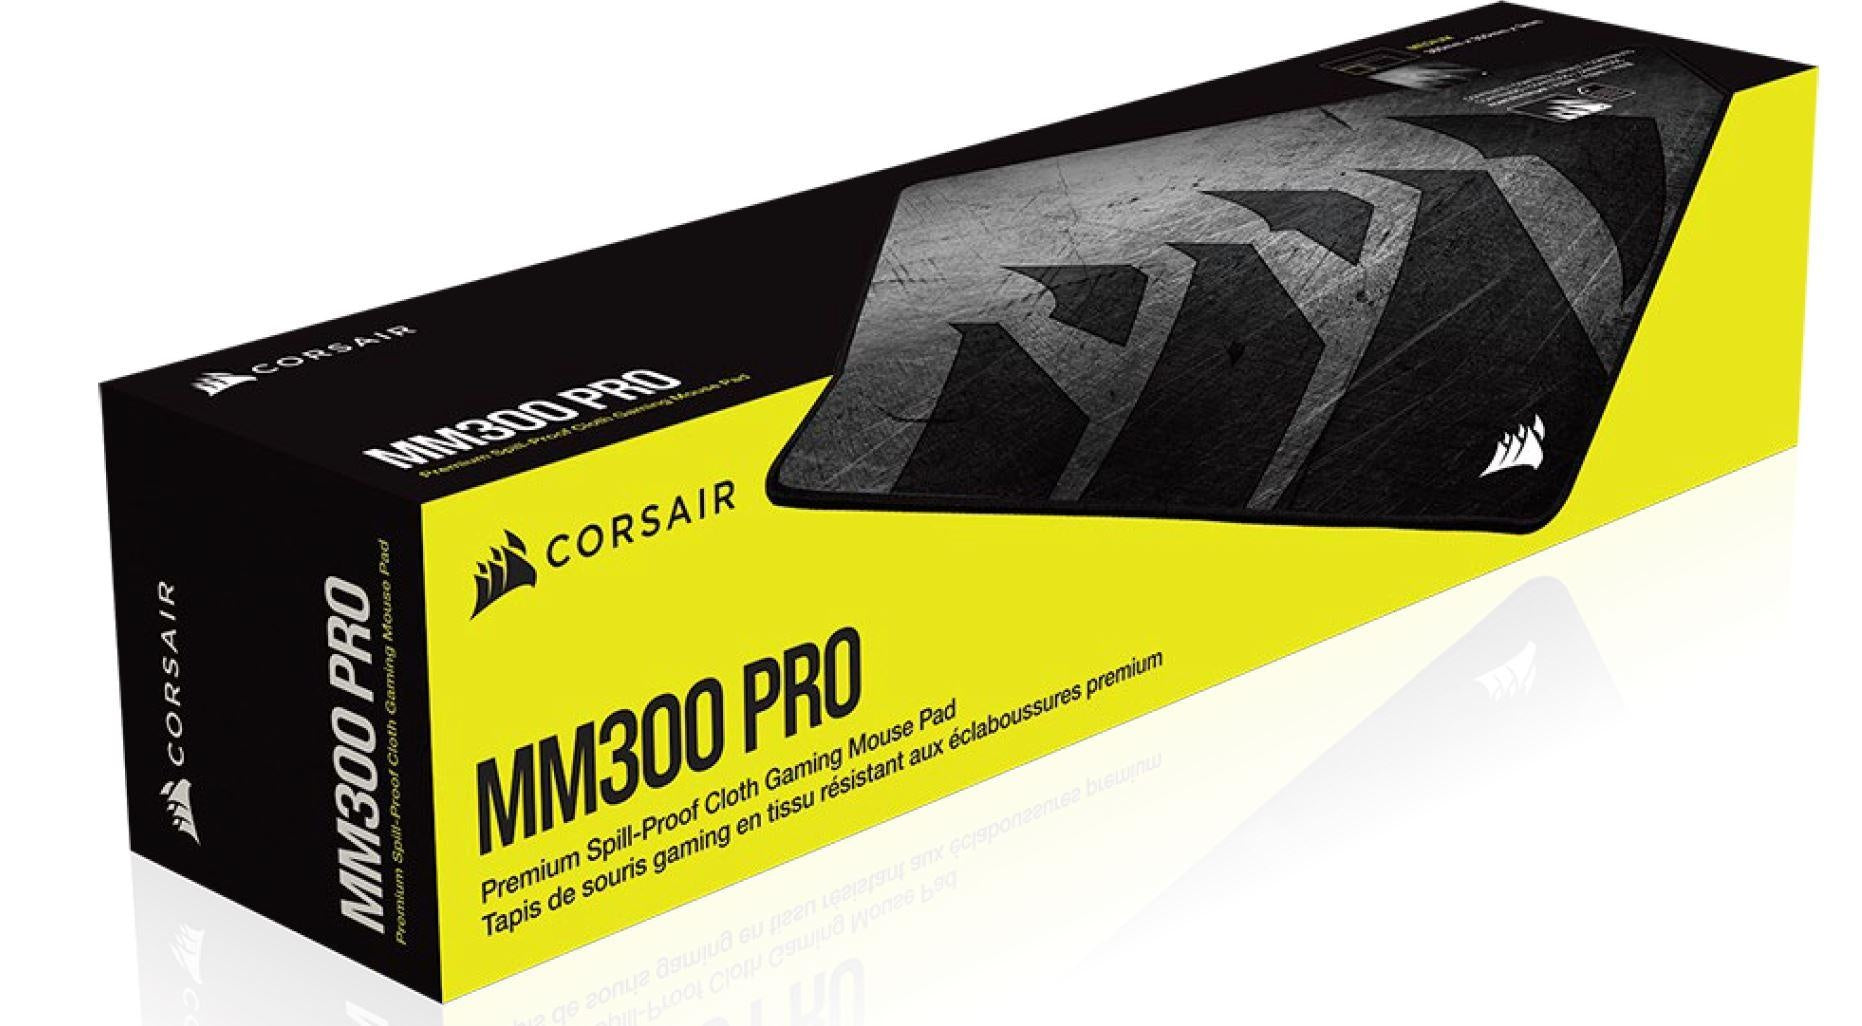 Corsair MM300 PRO Premium Spill-Proof Cloth Gaming Mouse Pad â€“ Medium - 360mm x 300mm x 3mm, Graphic Surface CORSAIR